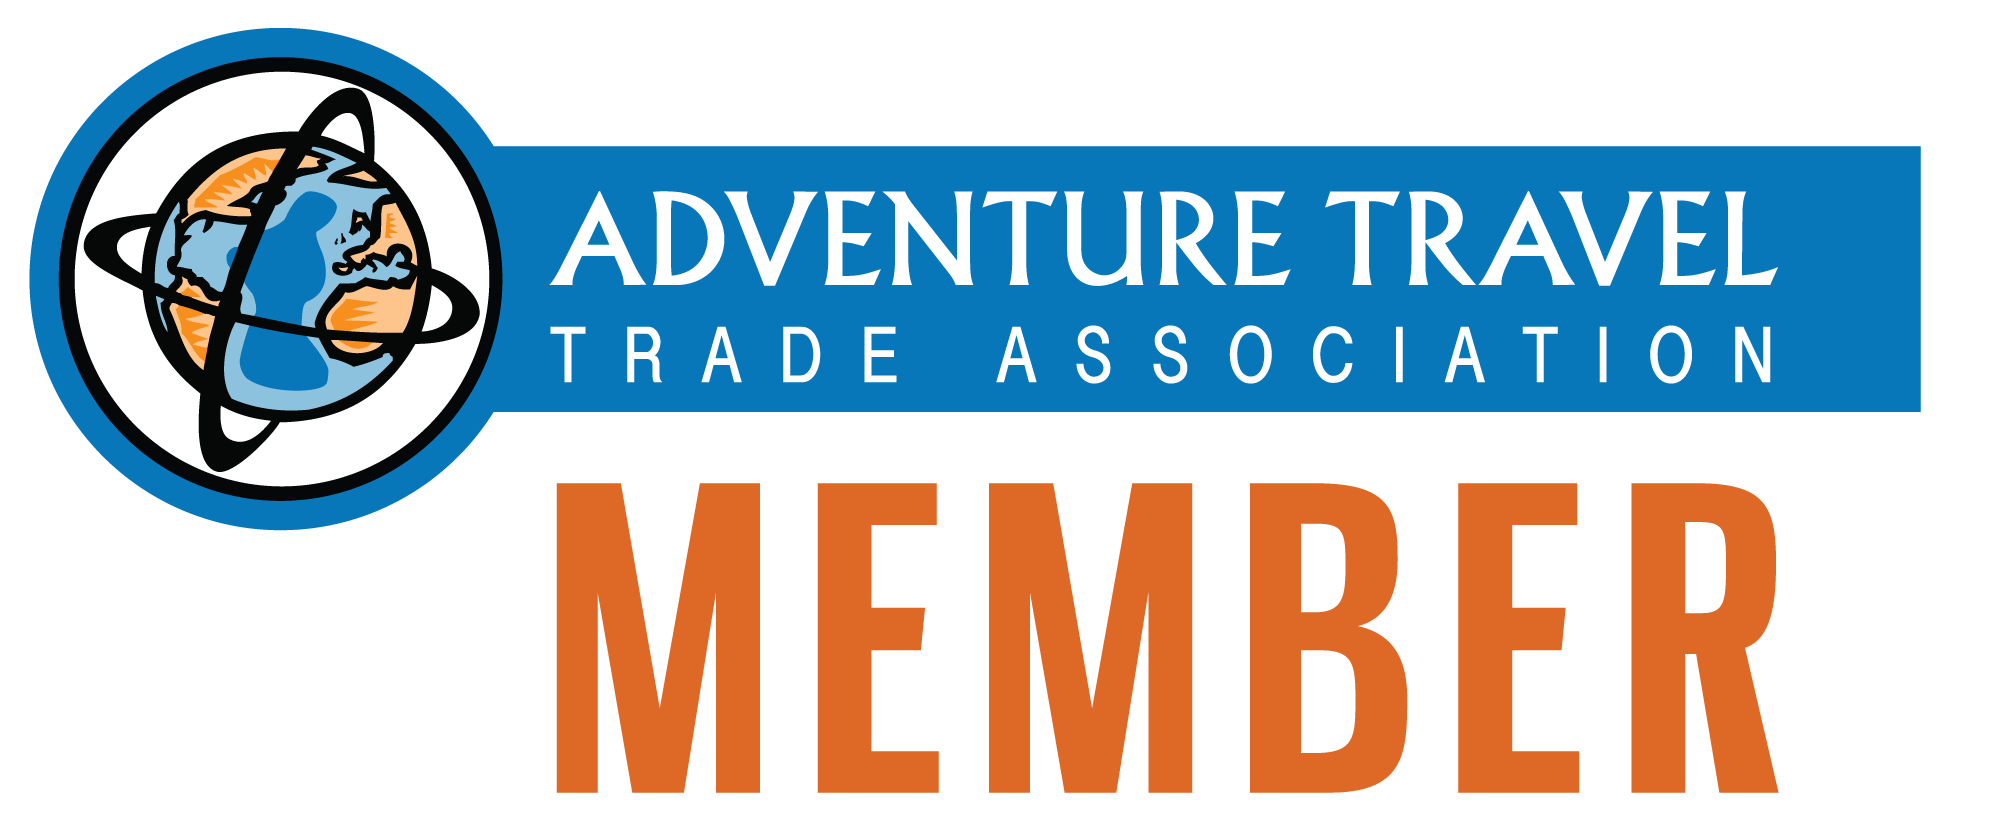 Adventure Travel Association Member